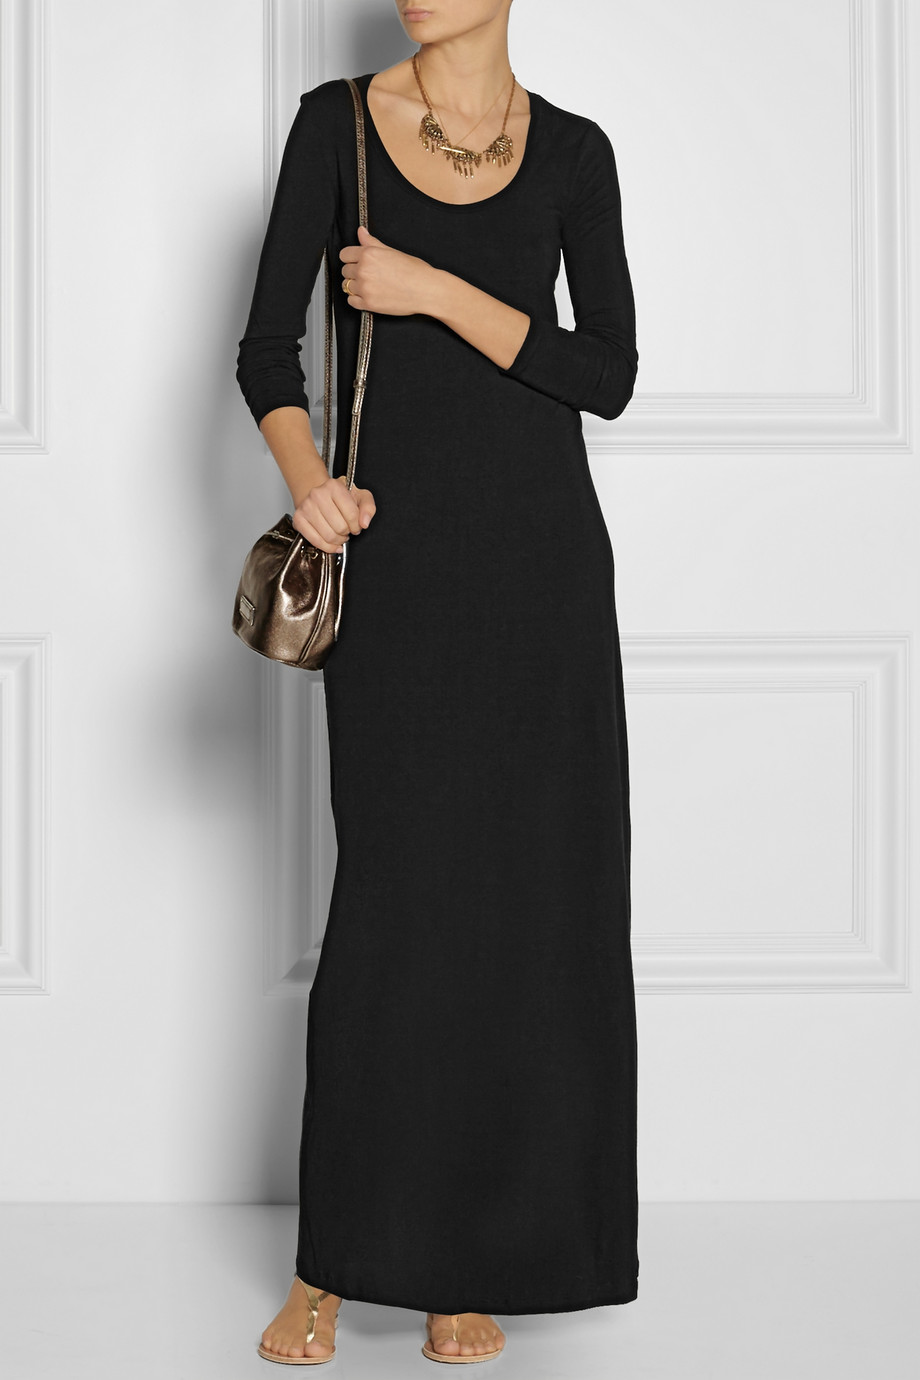 Lyst - Splendid Stretch-Jersey Maxi Dress in Black